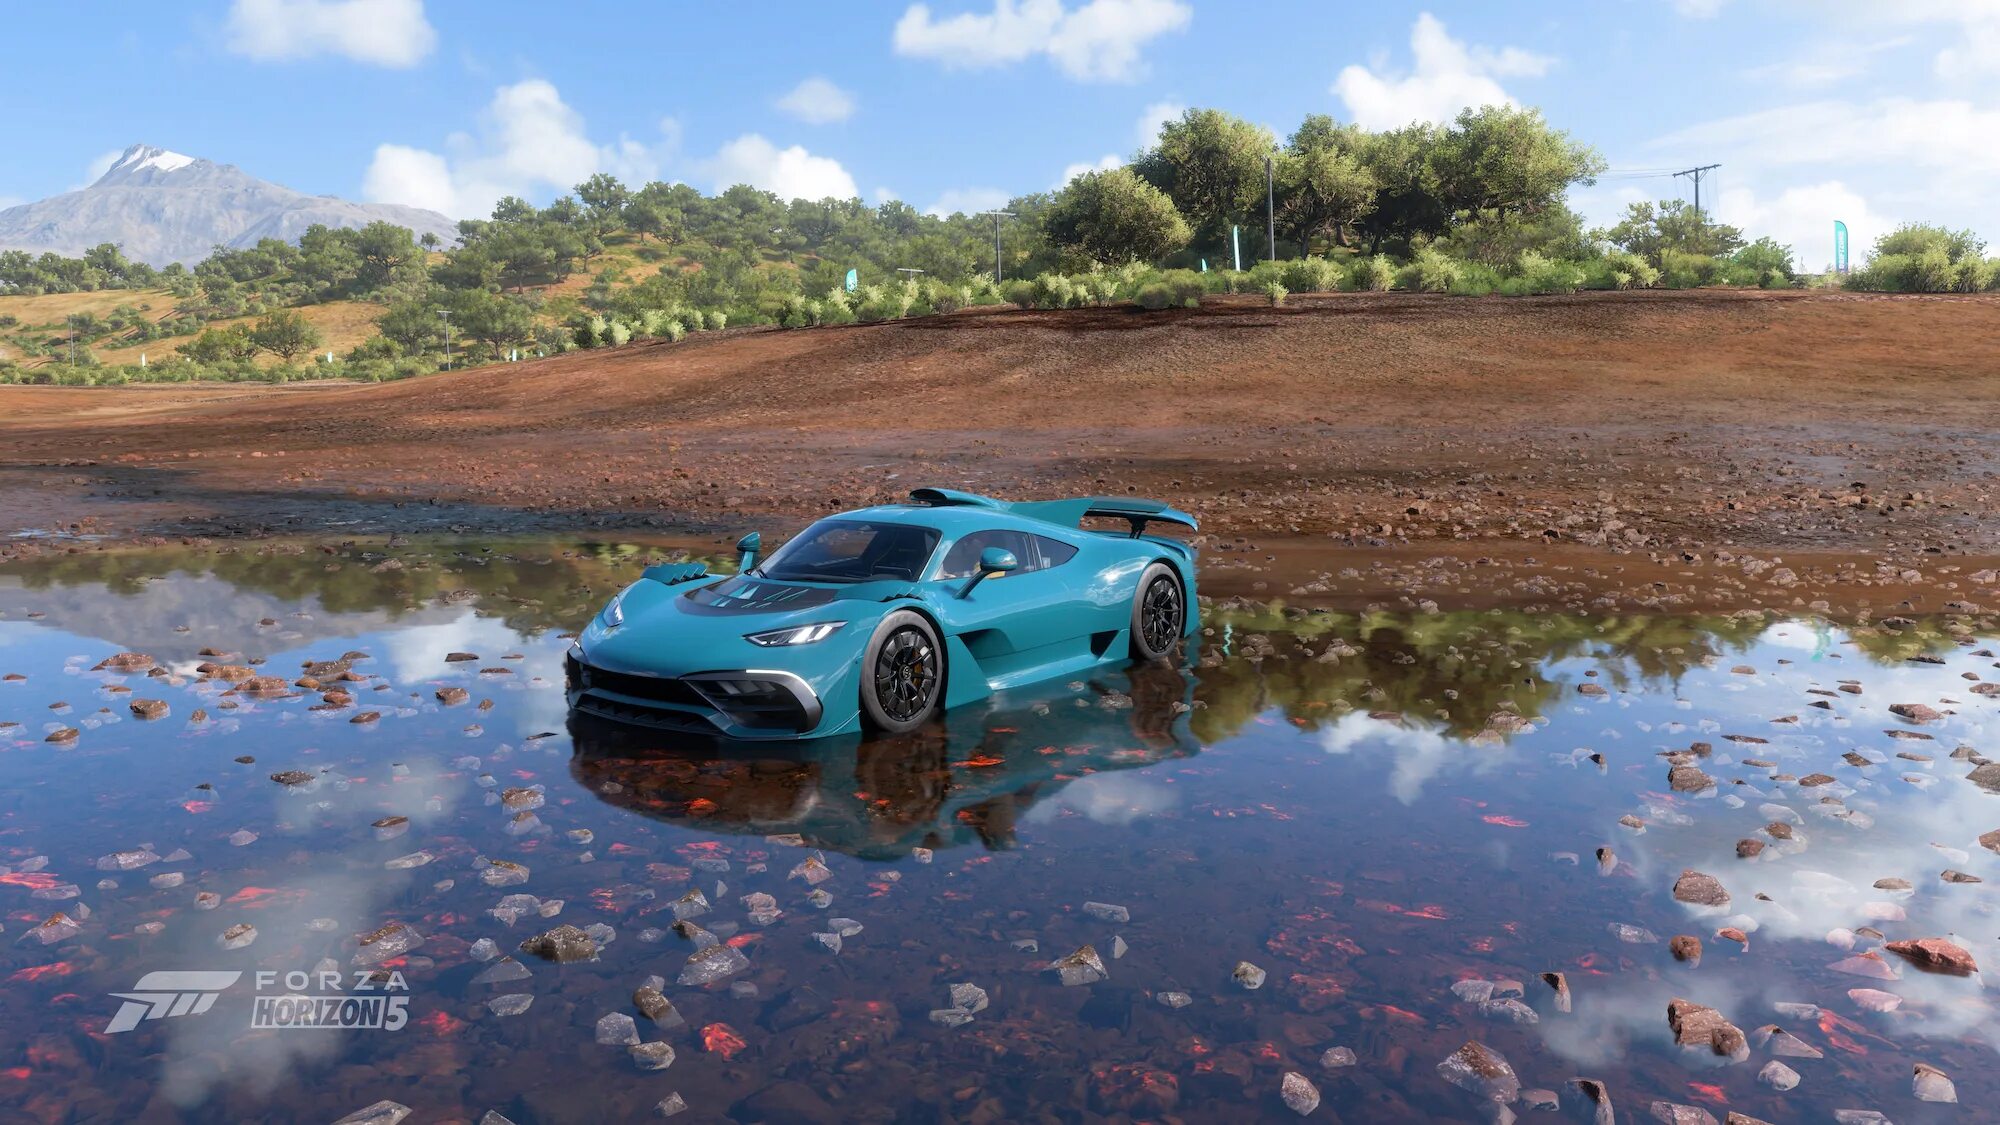 Форза 5 длс. Forza Horizon 5. Forza Horizon 5 внедорожники. Forza Horizon 5 Eliminator. Машины из Forza Horizon 5.